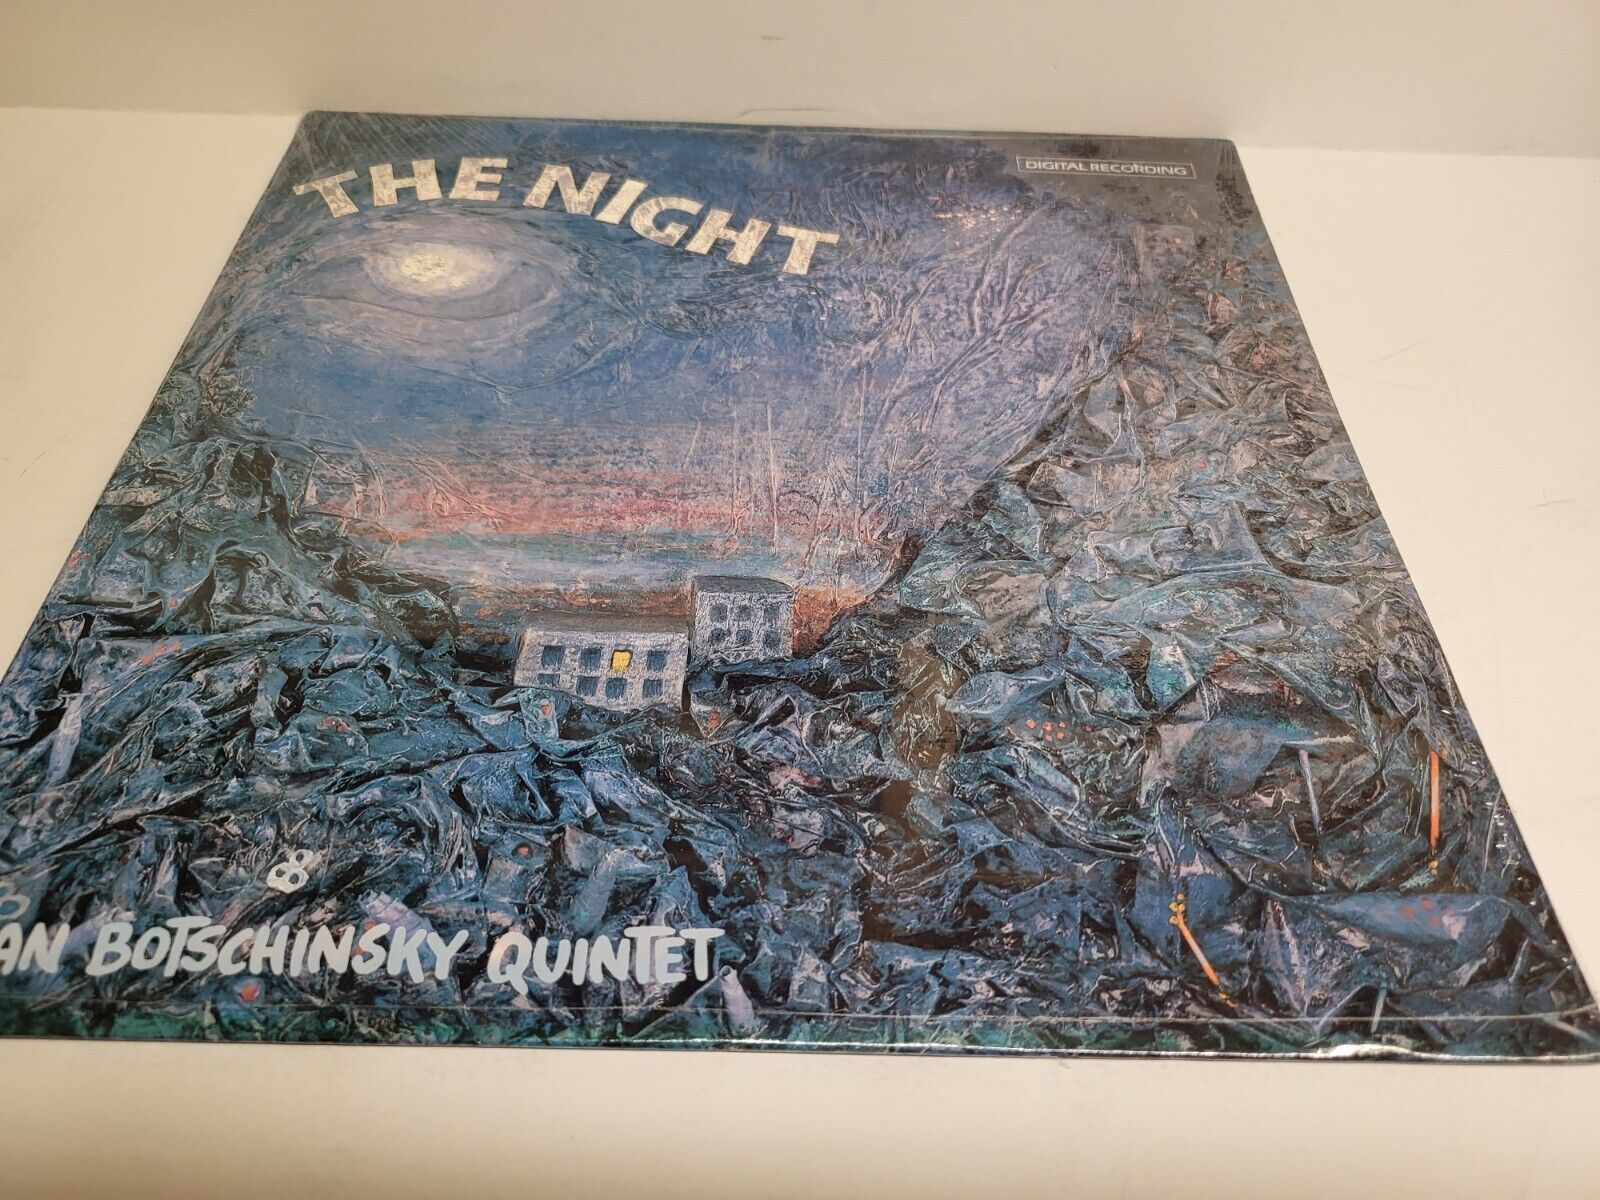 ALLAN BOTSCHINSKY QUINTET The Night LP Direct Metal Mastering Audiophile N/M